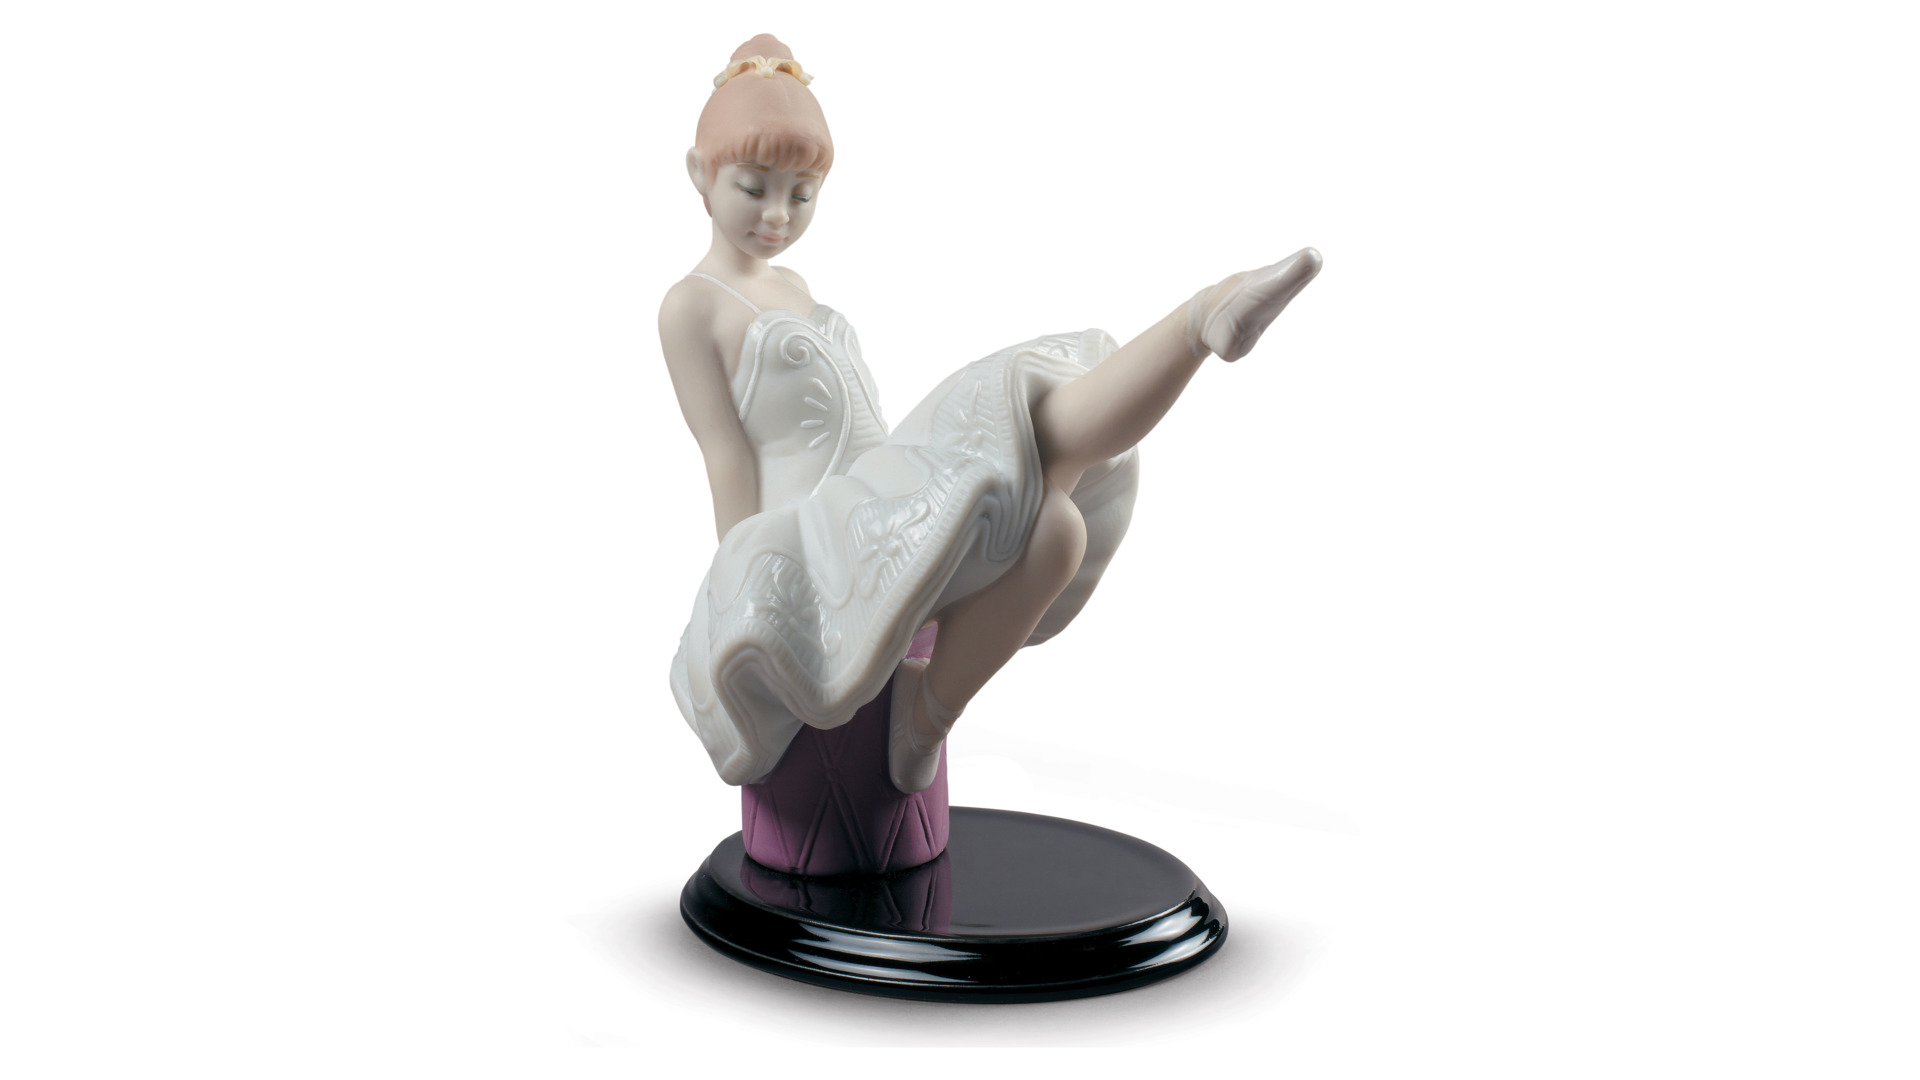 Фигурка Lladro Юная балерина II 12х14 см, фарфор